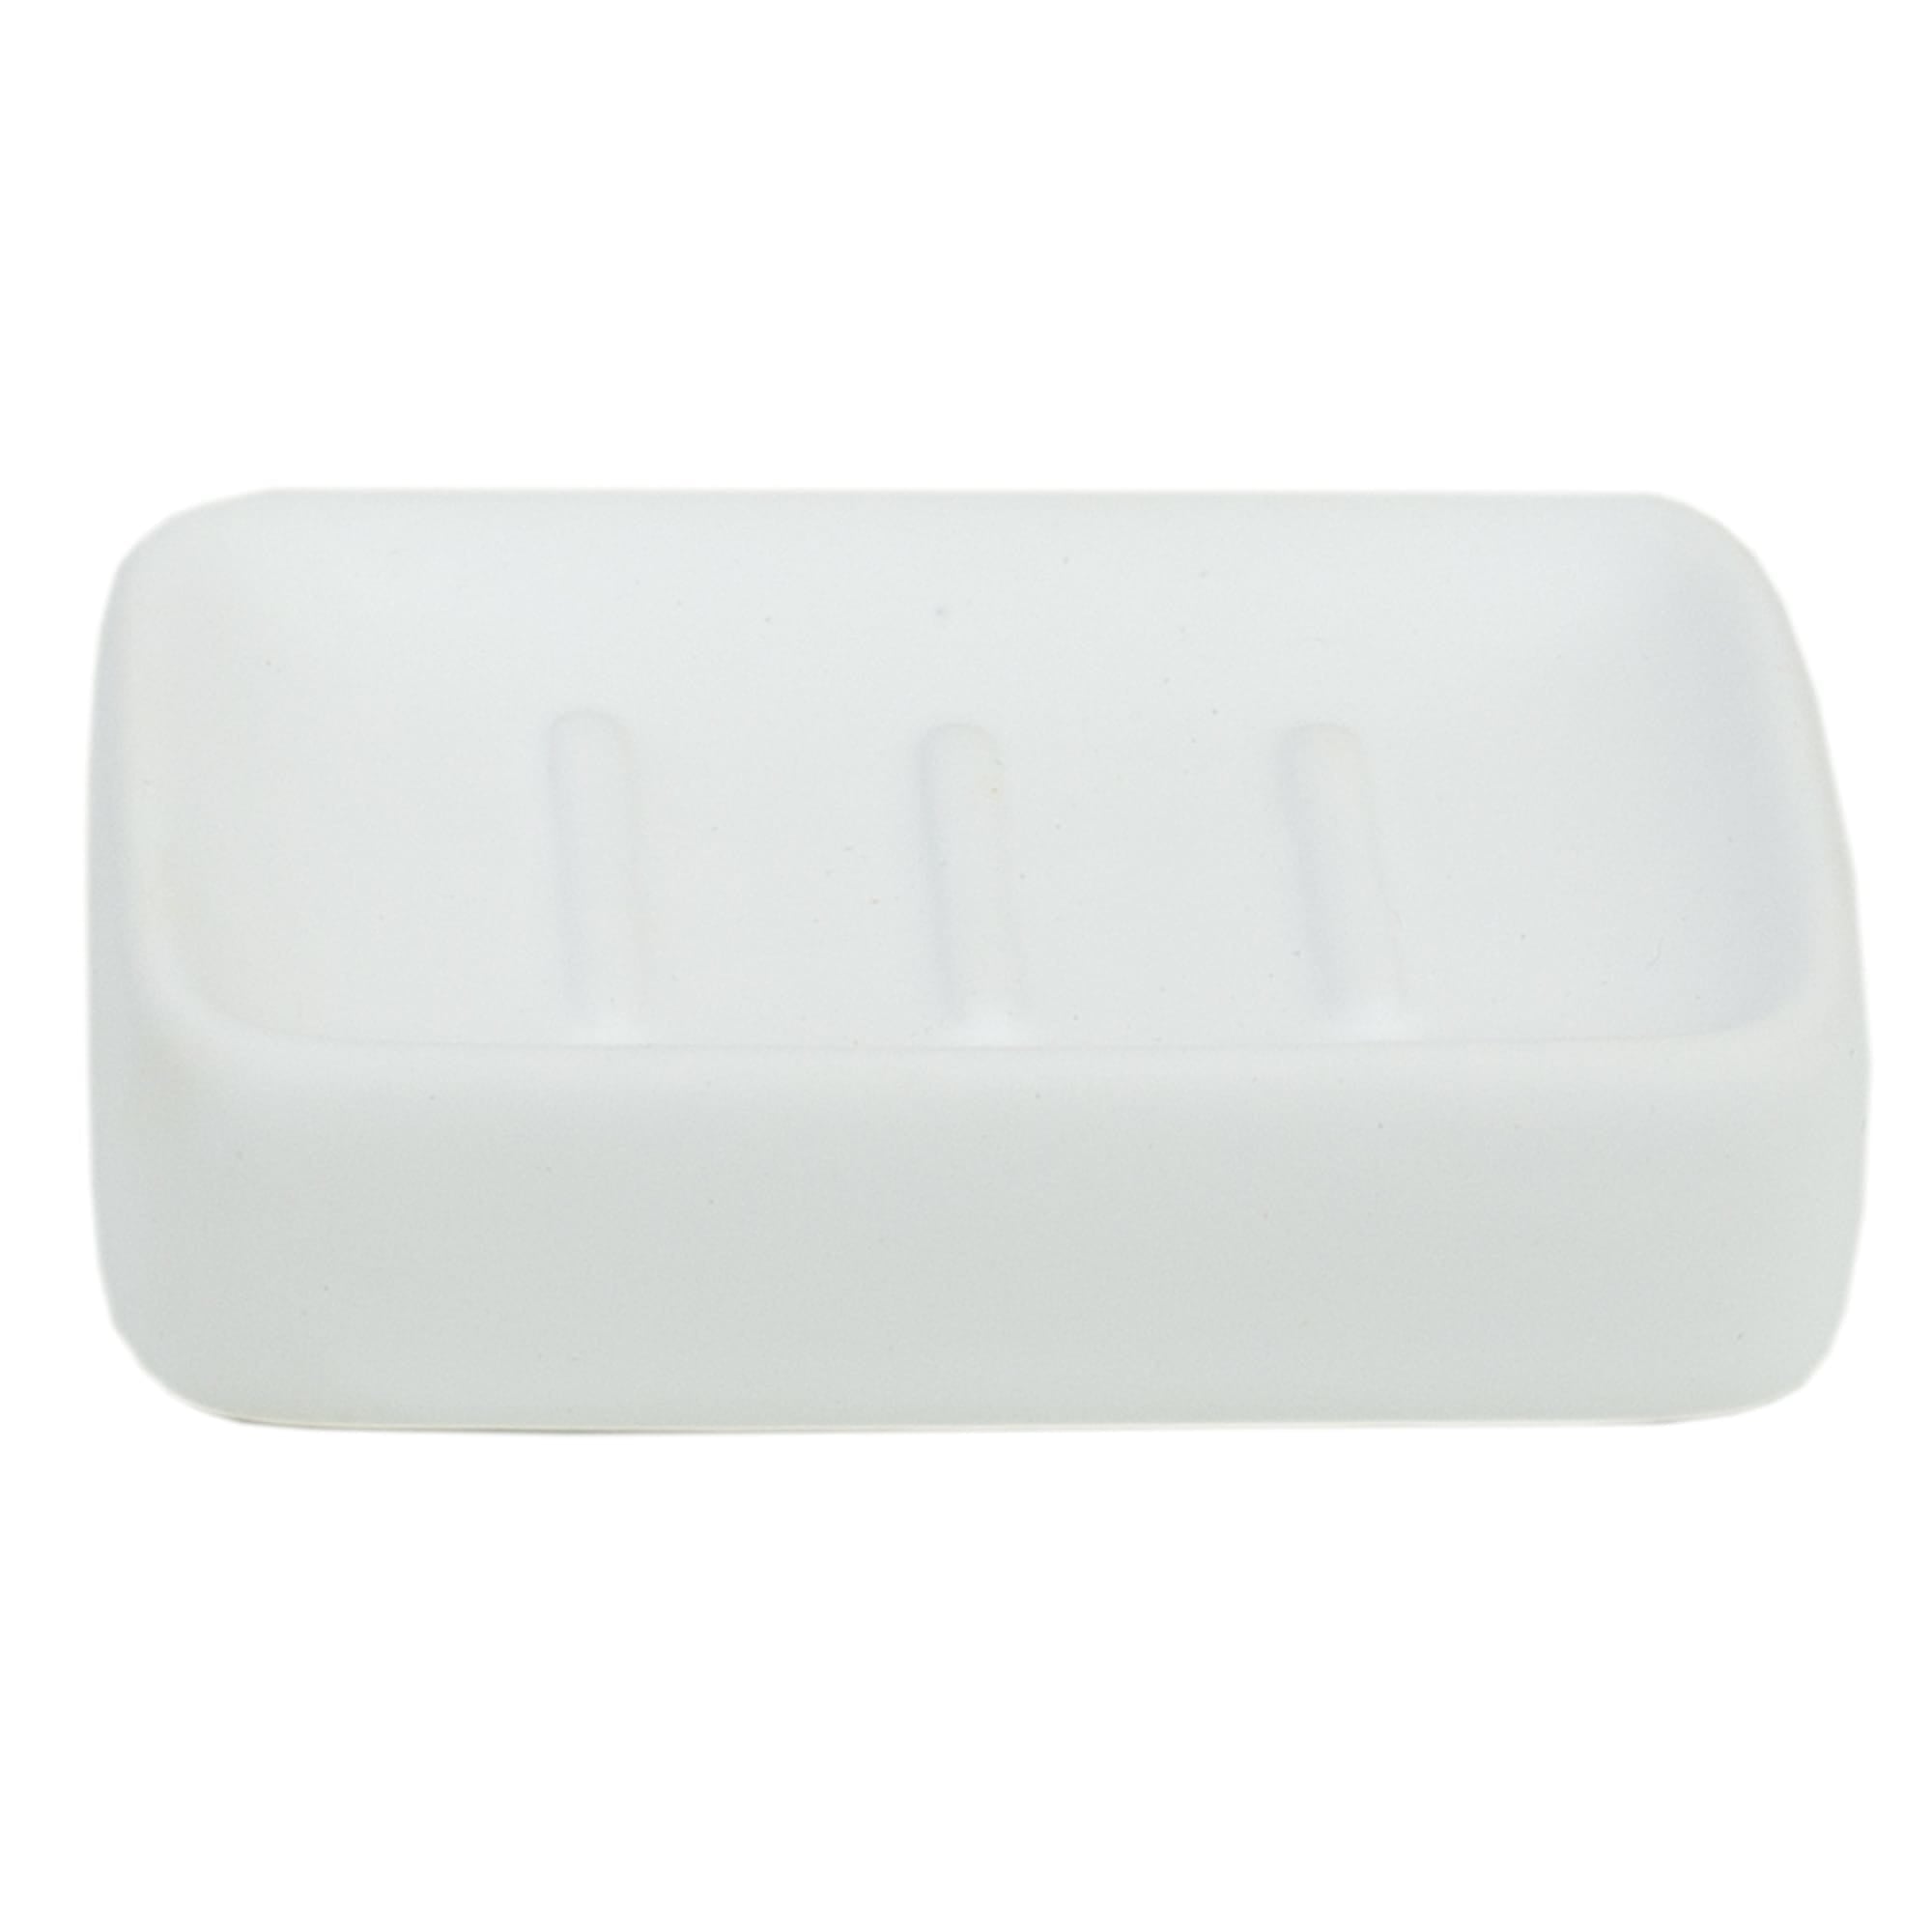 Home Basics Loft 4 Piece Ceramic Bath Accessory Set, White $12.00 EACH, CASE PACK OF 6